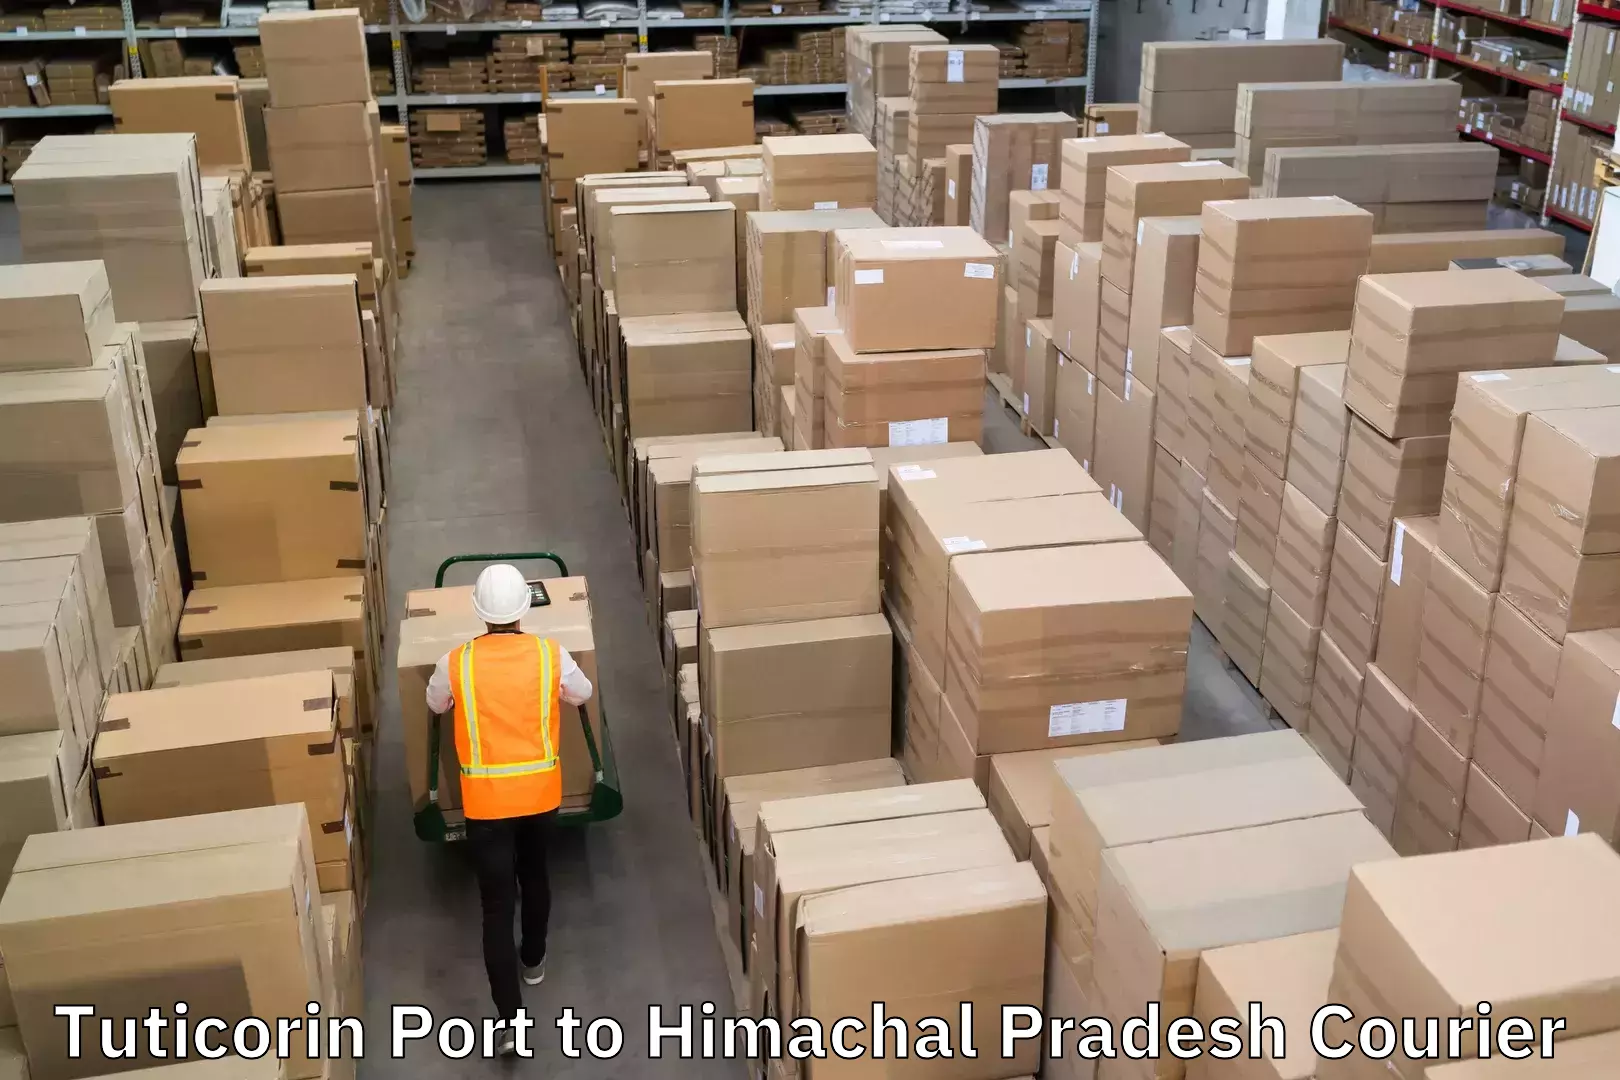 24-hour courier service Tuticorin Port to Himachal Pradesh